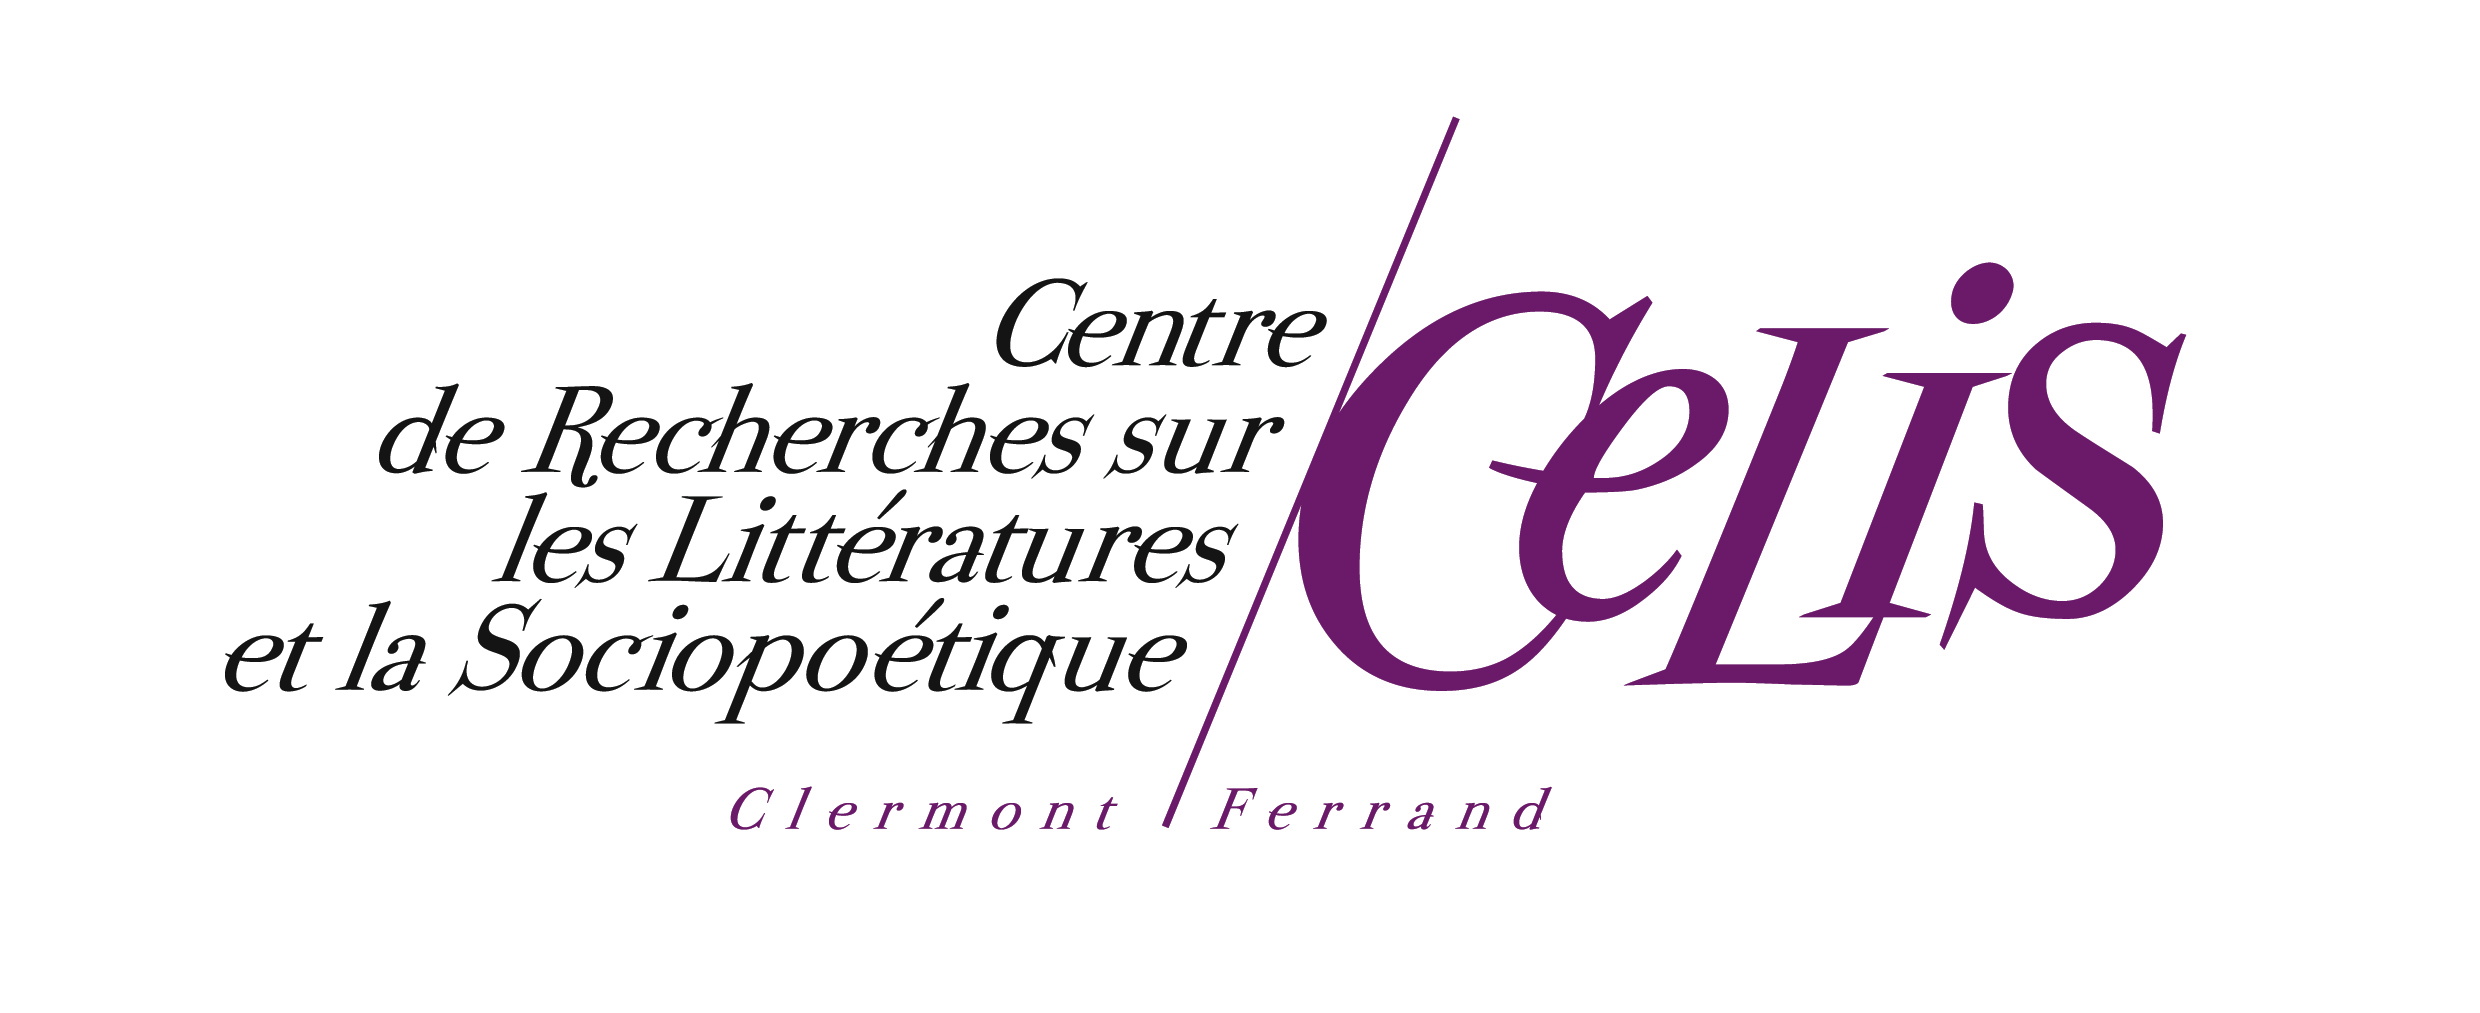 Logo CELIS quadri